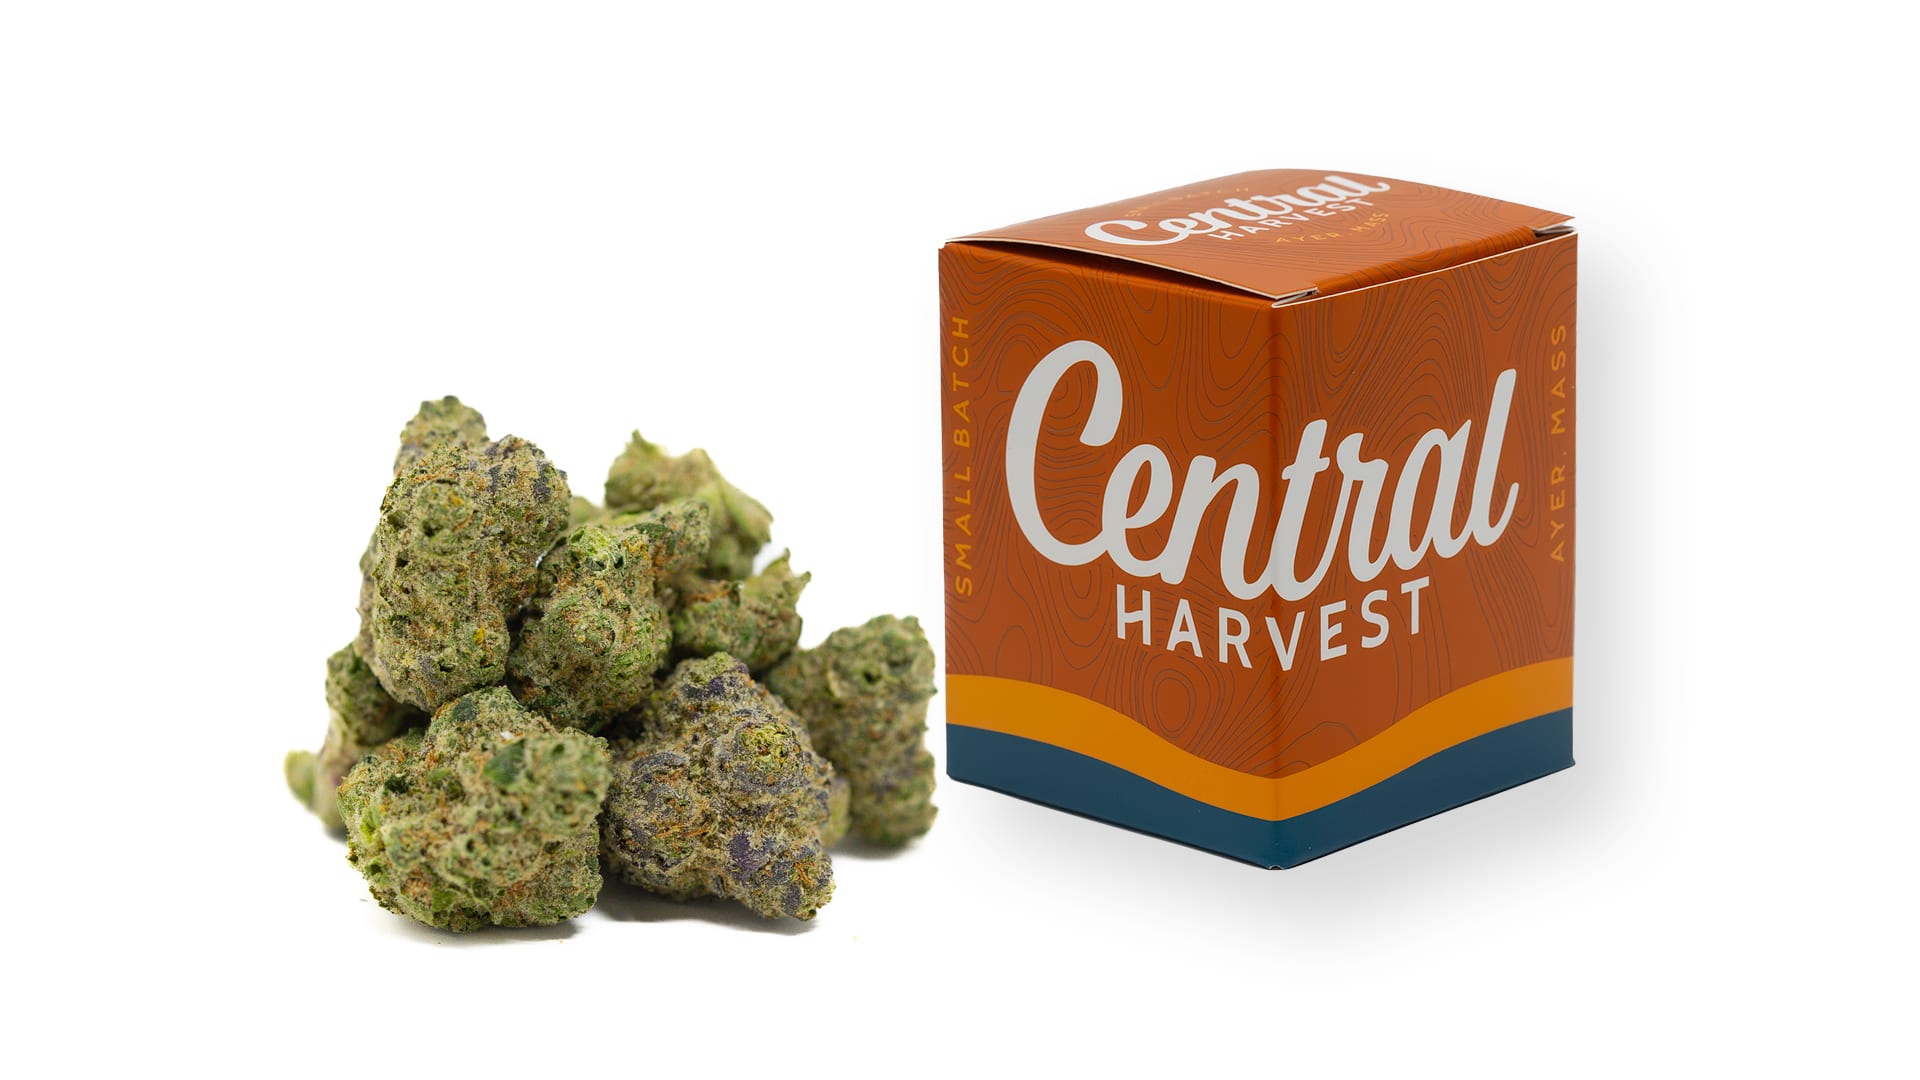 Chem Puff is a Hybrid Cannabis strain grown by Central Harvest